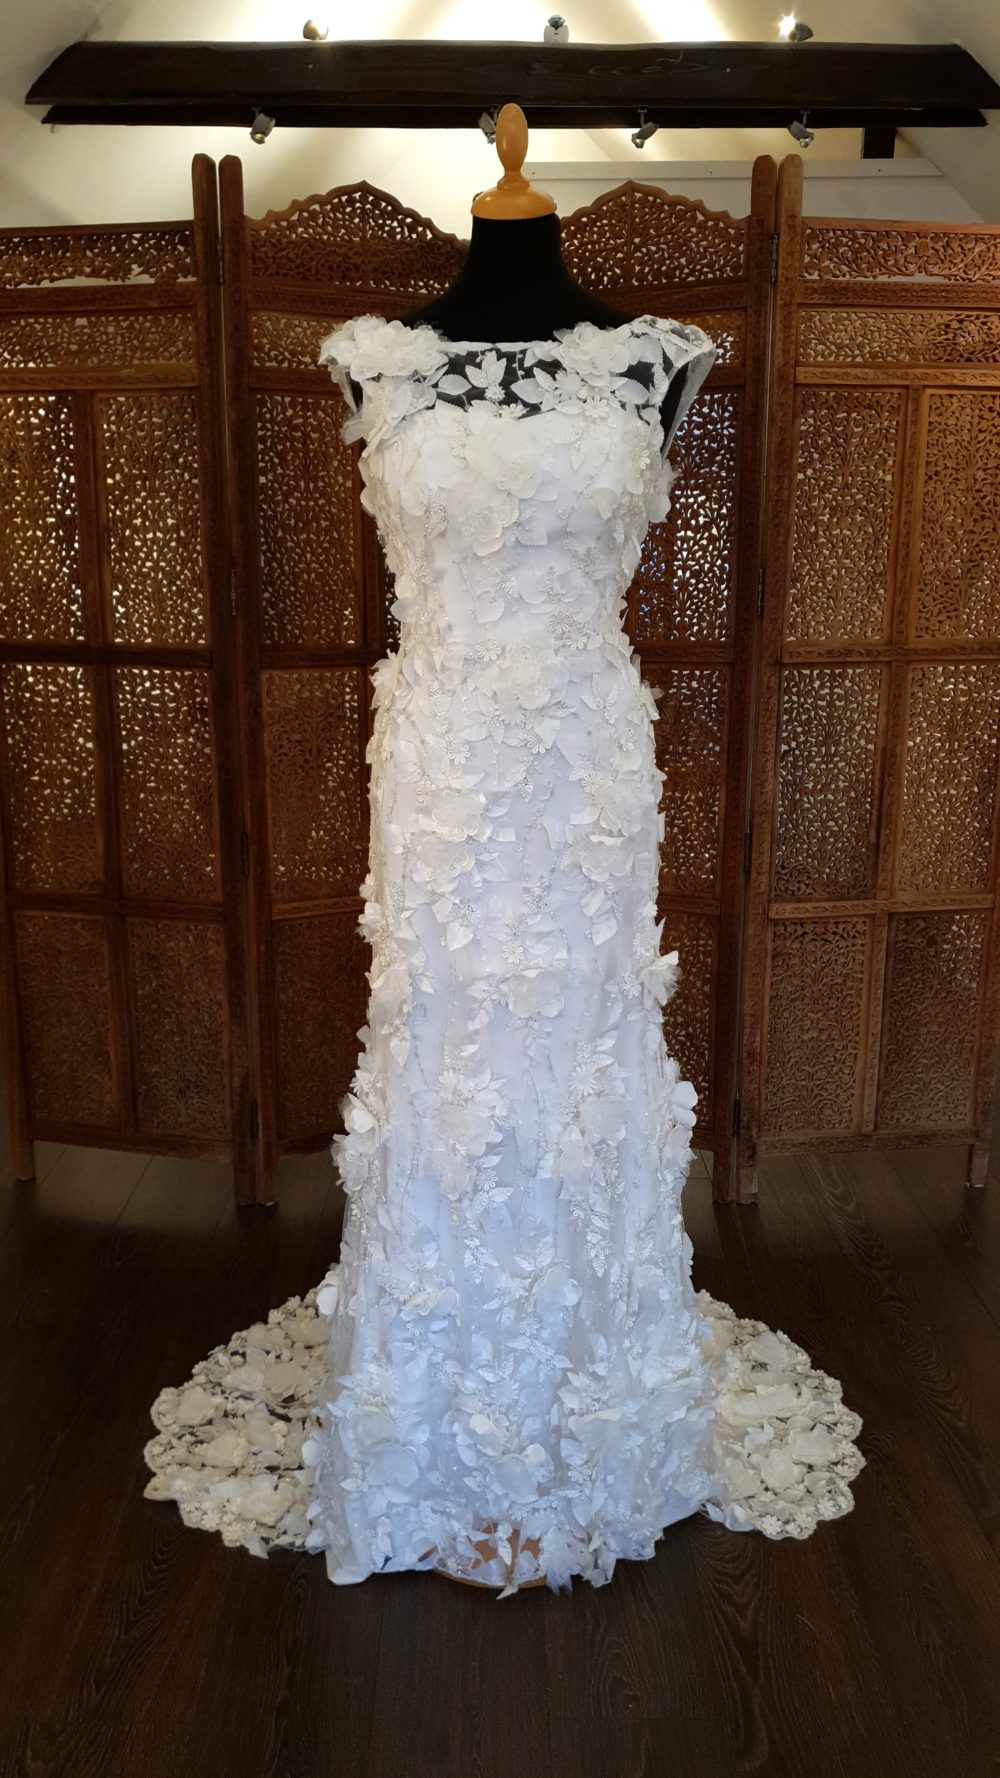 Smuk unik skrædderesyet brudekjole fra Rikke Tudnitz. Den slanke kjole er 2 delt bestående af en glat inderskjole med snøre i ryggen og en blondekjole udenpå fyldt med 3-D blomster. Kjolen har bådudskæring, små korte ærmer og et virkelig smukt slæb.